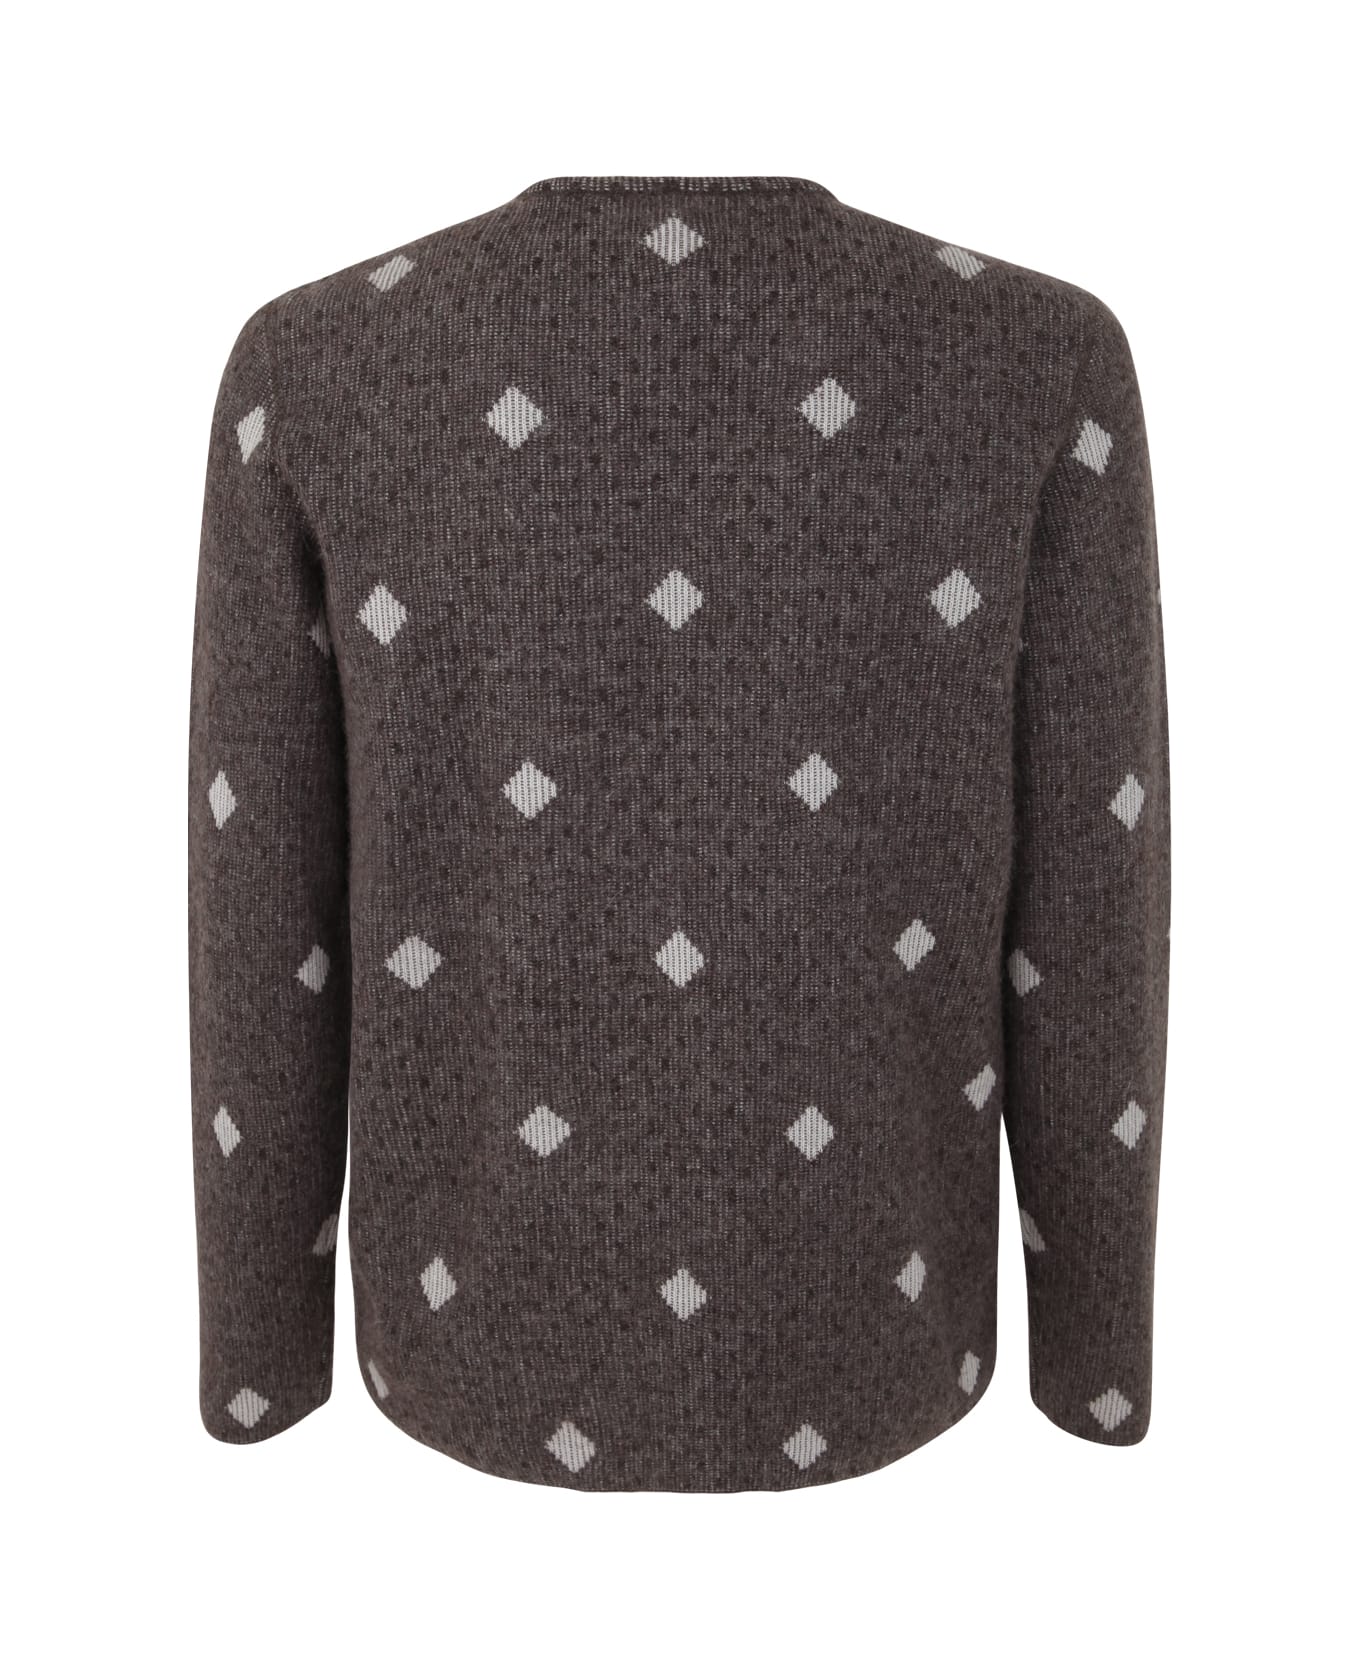 Giorgio Armani Sweater - Fancy Iron